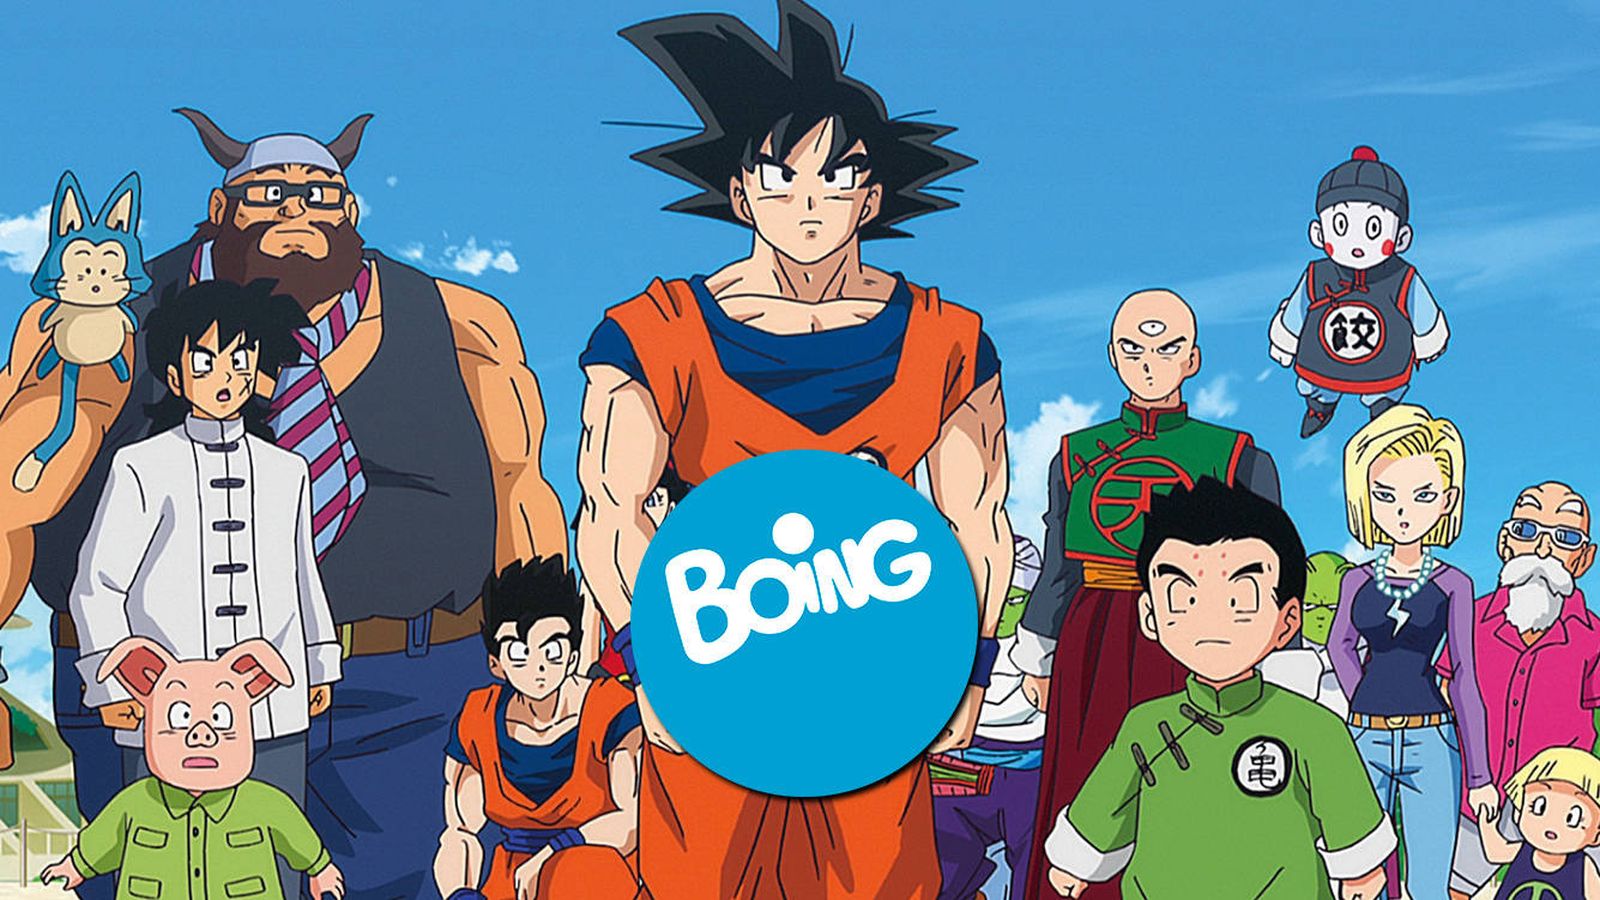 Boing, acusada de censurar y maltratar 'Dragon Ball Super'